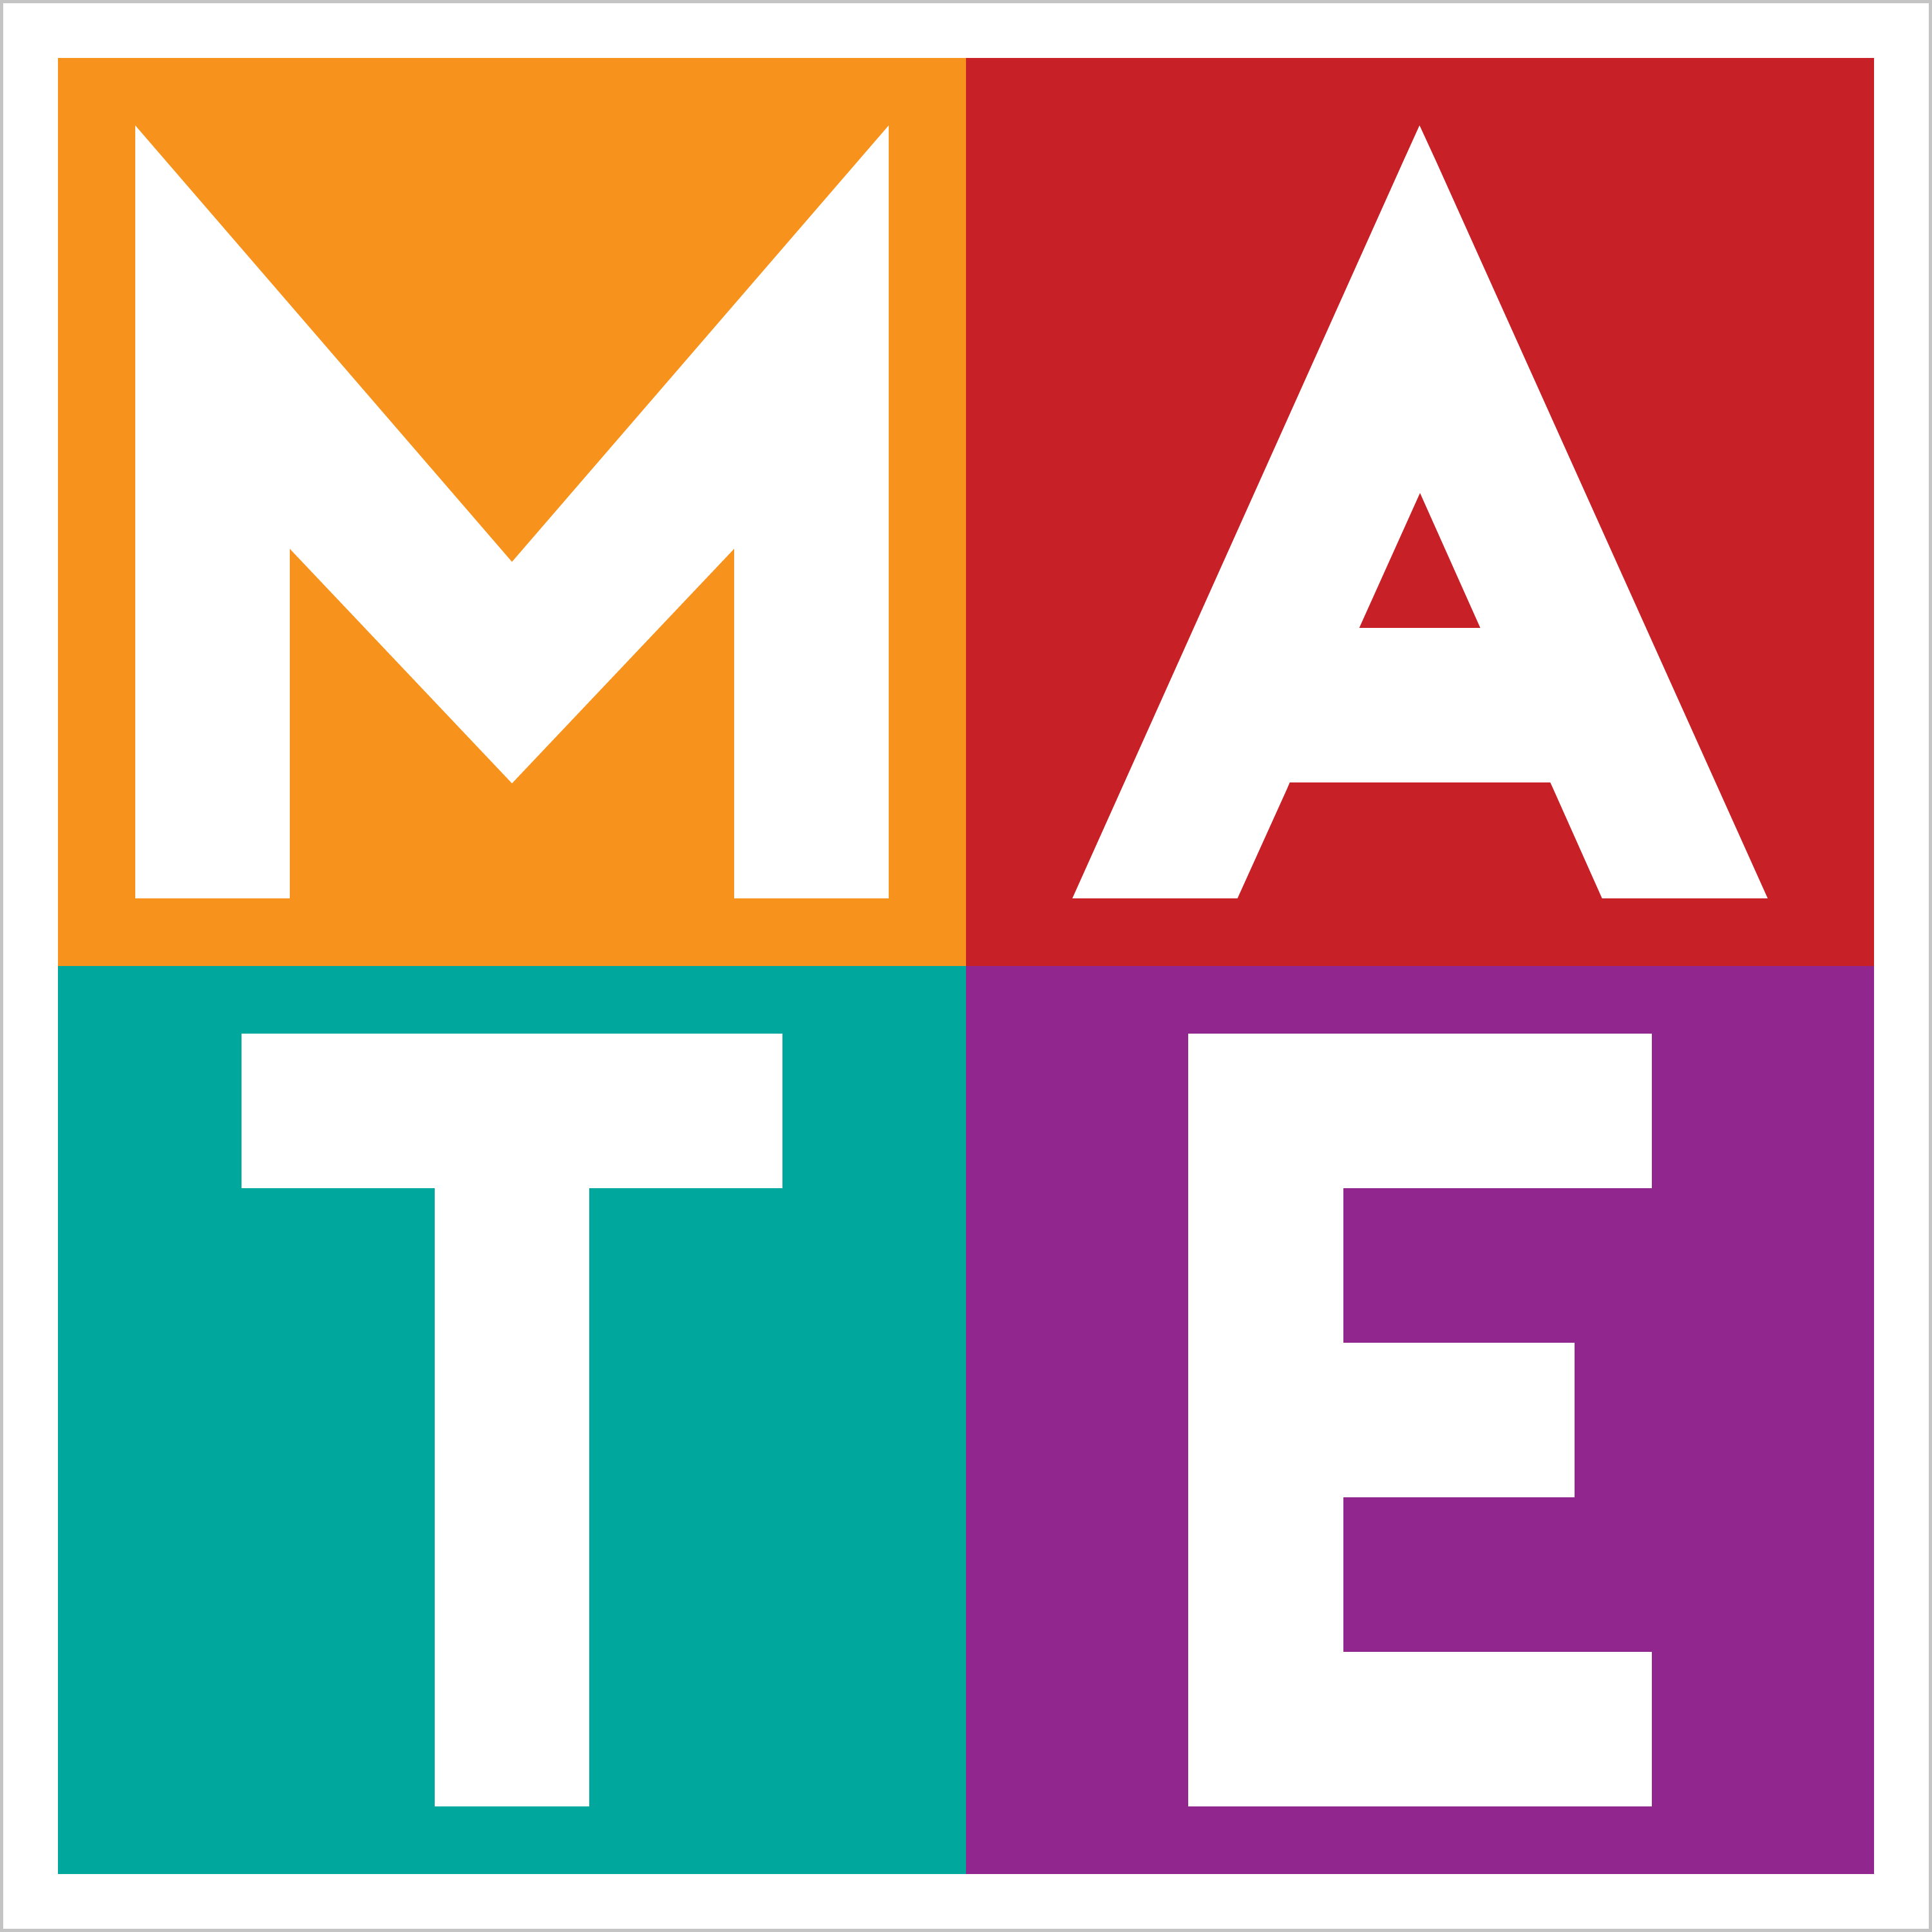 MATE: Marketing, Advertising, Technology and Entrepreneurship